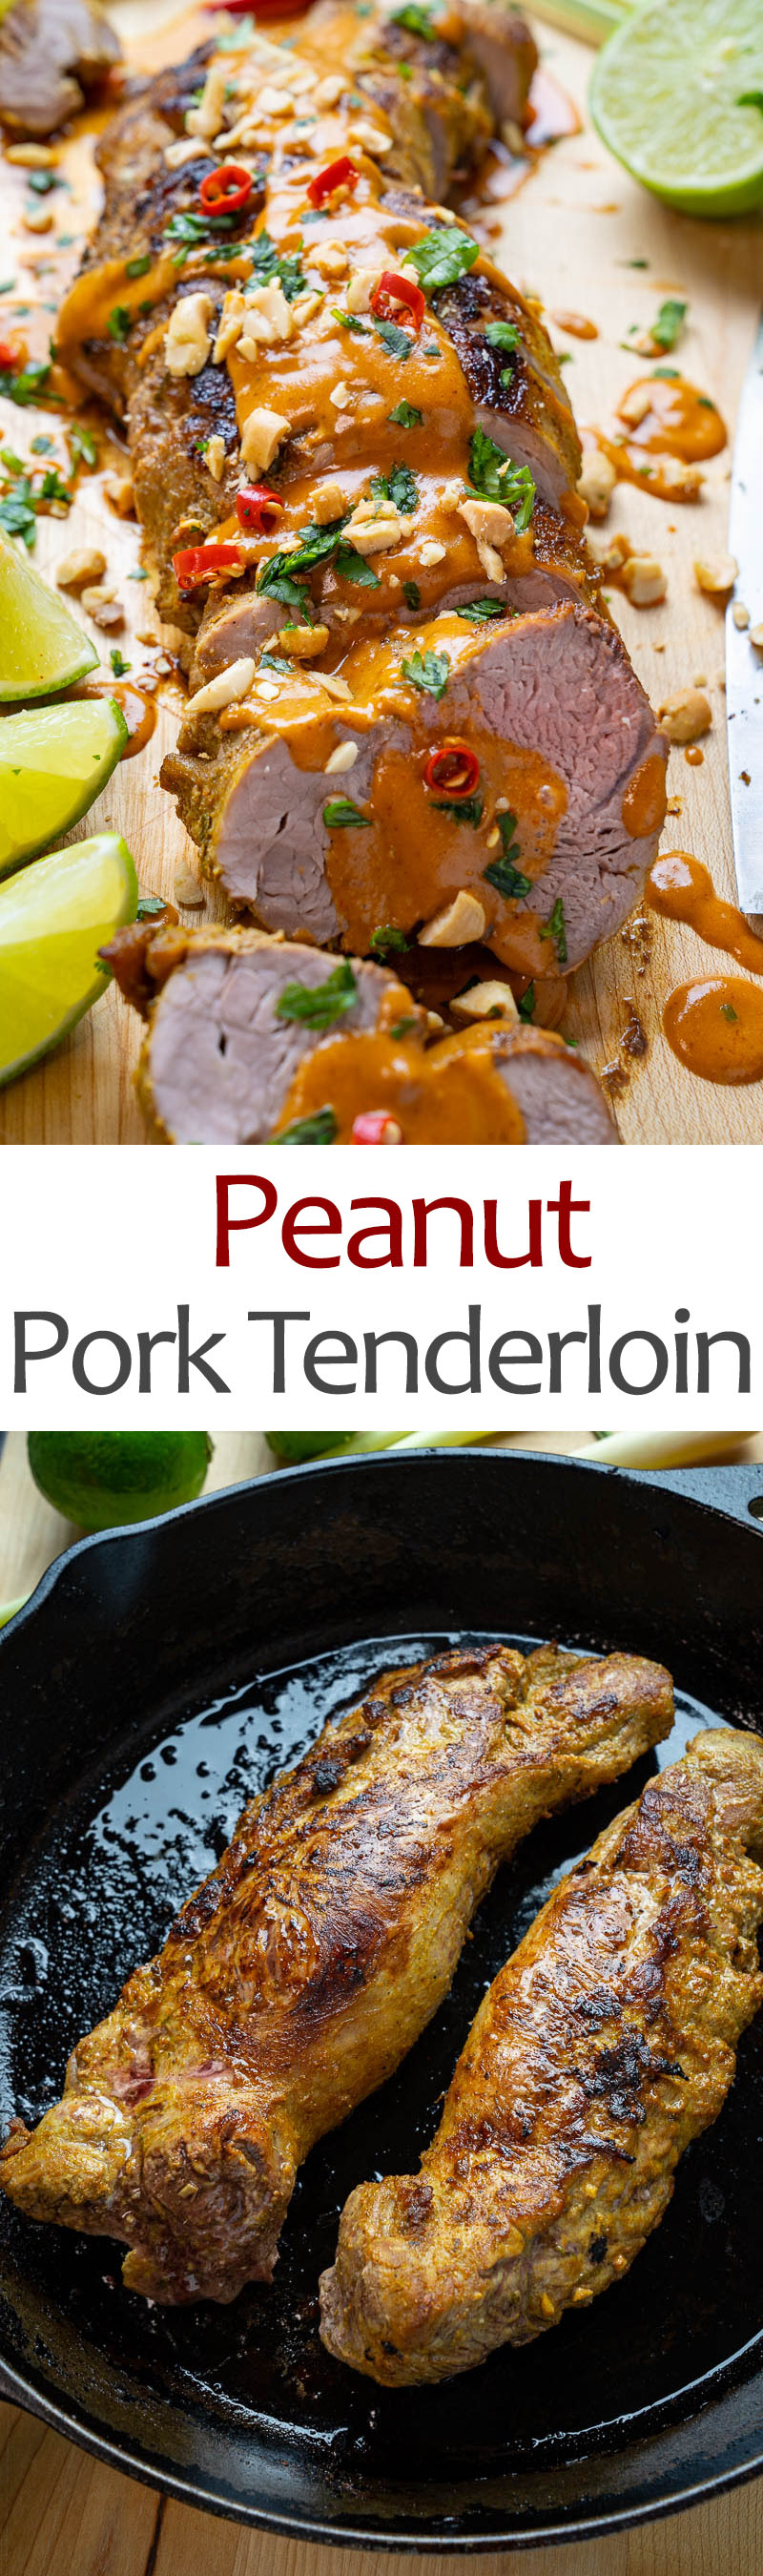 Peanut Pork Tenderloin